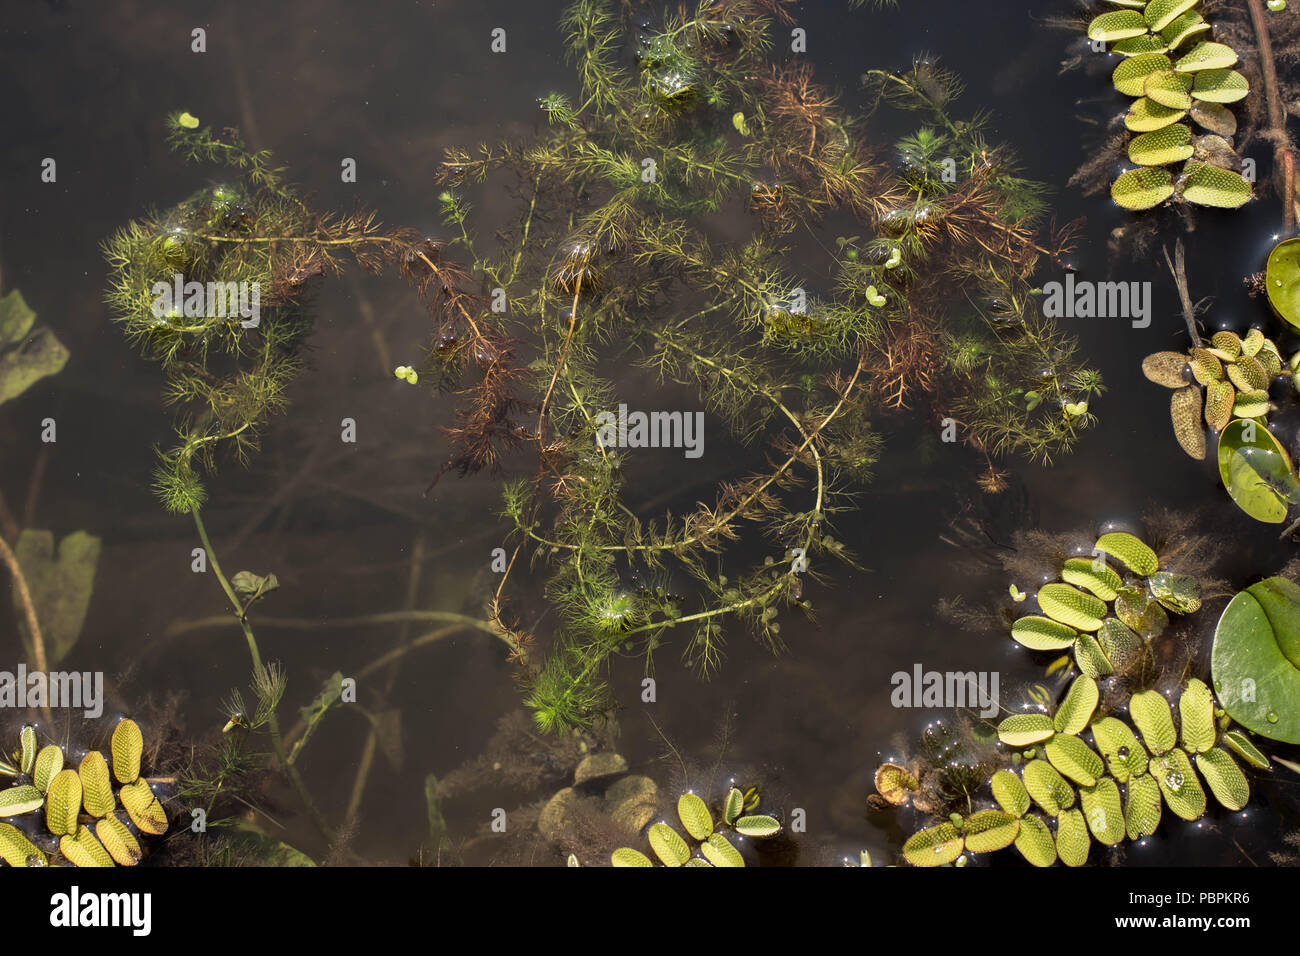 common bladderwort - Utricularia vulgaris floating in the water Stock Photo